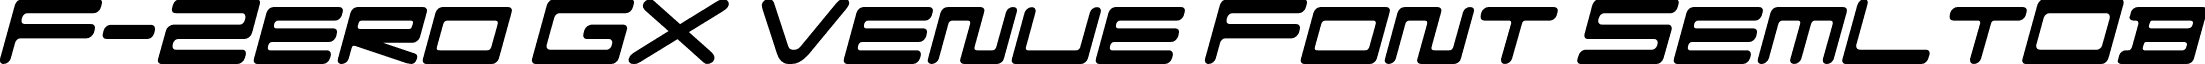 F-Zero GX Venue Font SemLtOb font - FZGXVenueFont-SemiLightOblique.otf